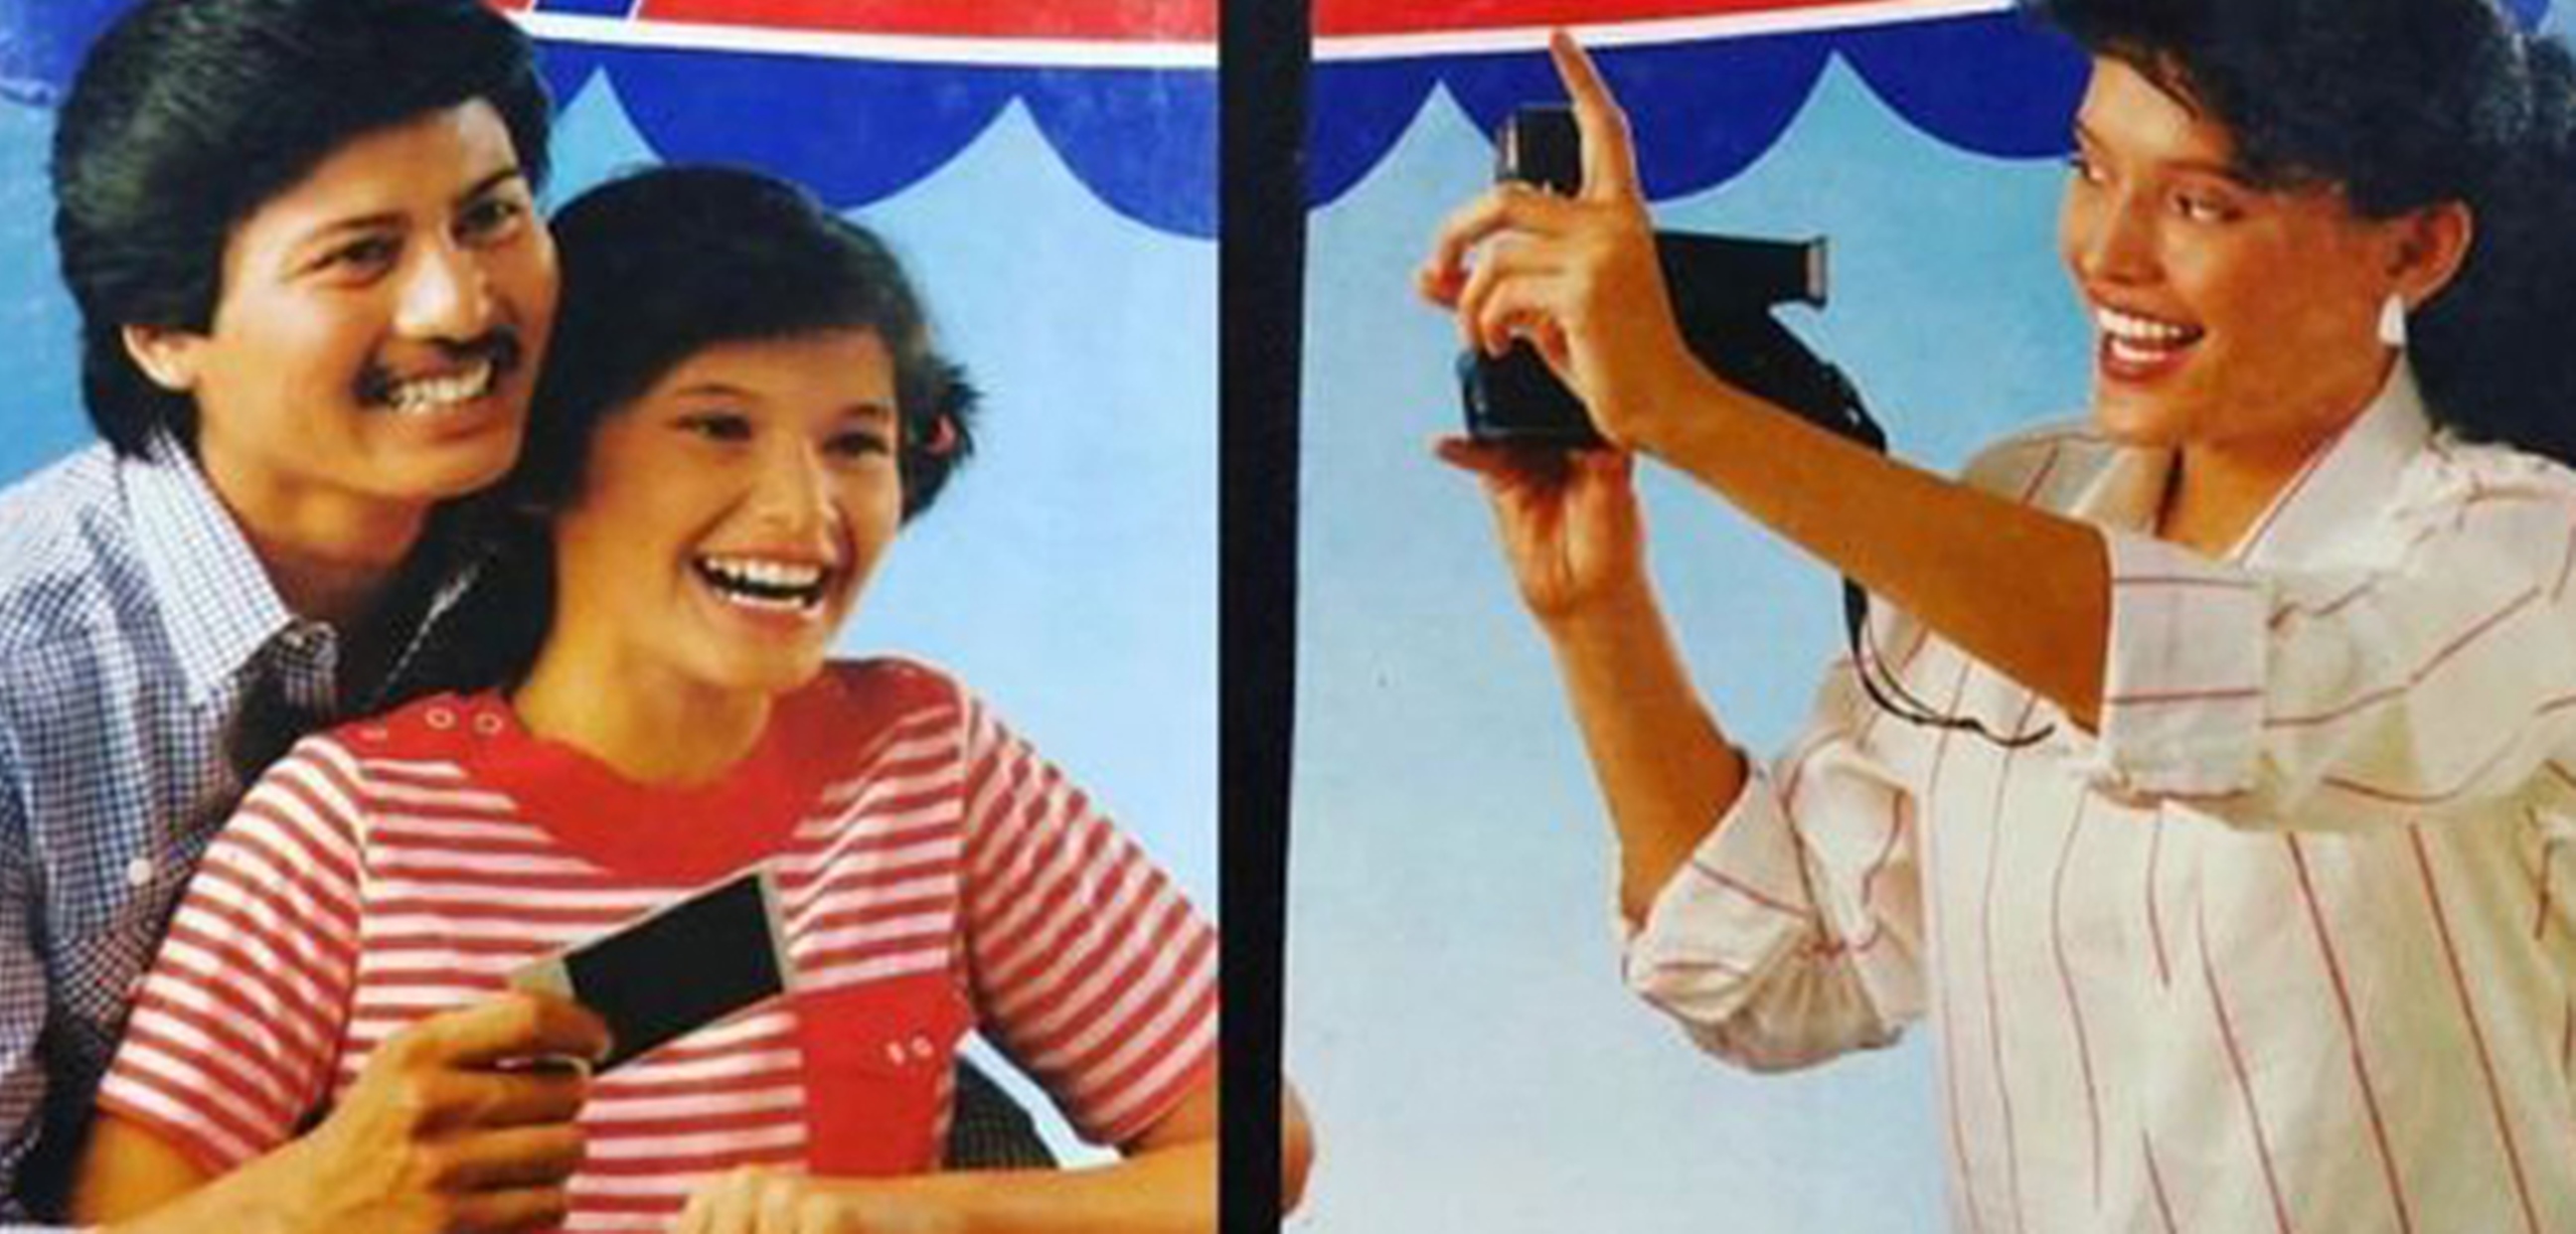 Gadis remaja di iklan pasta gigi era 80-an ini ternyata ibu aktor ganteng, intip 11 transformasinya